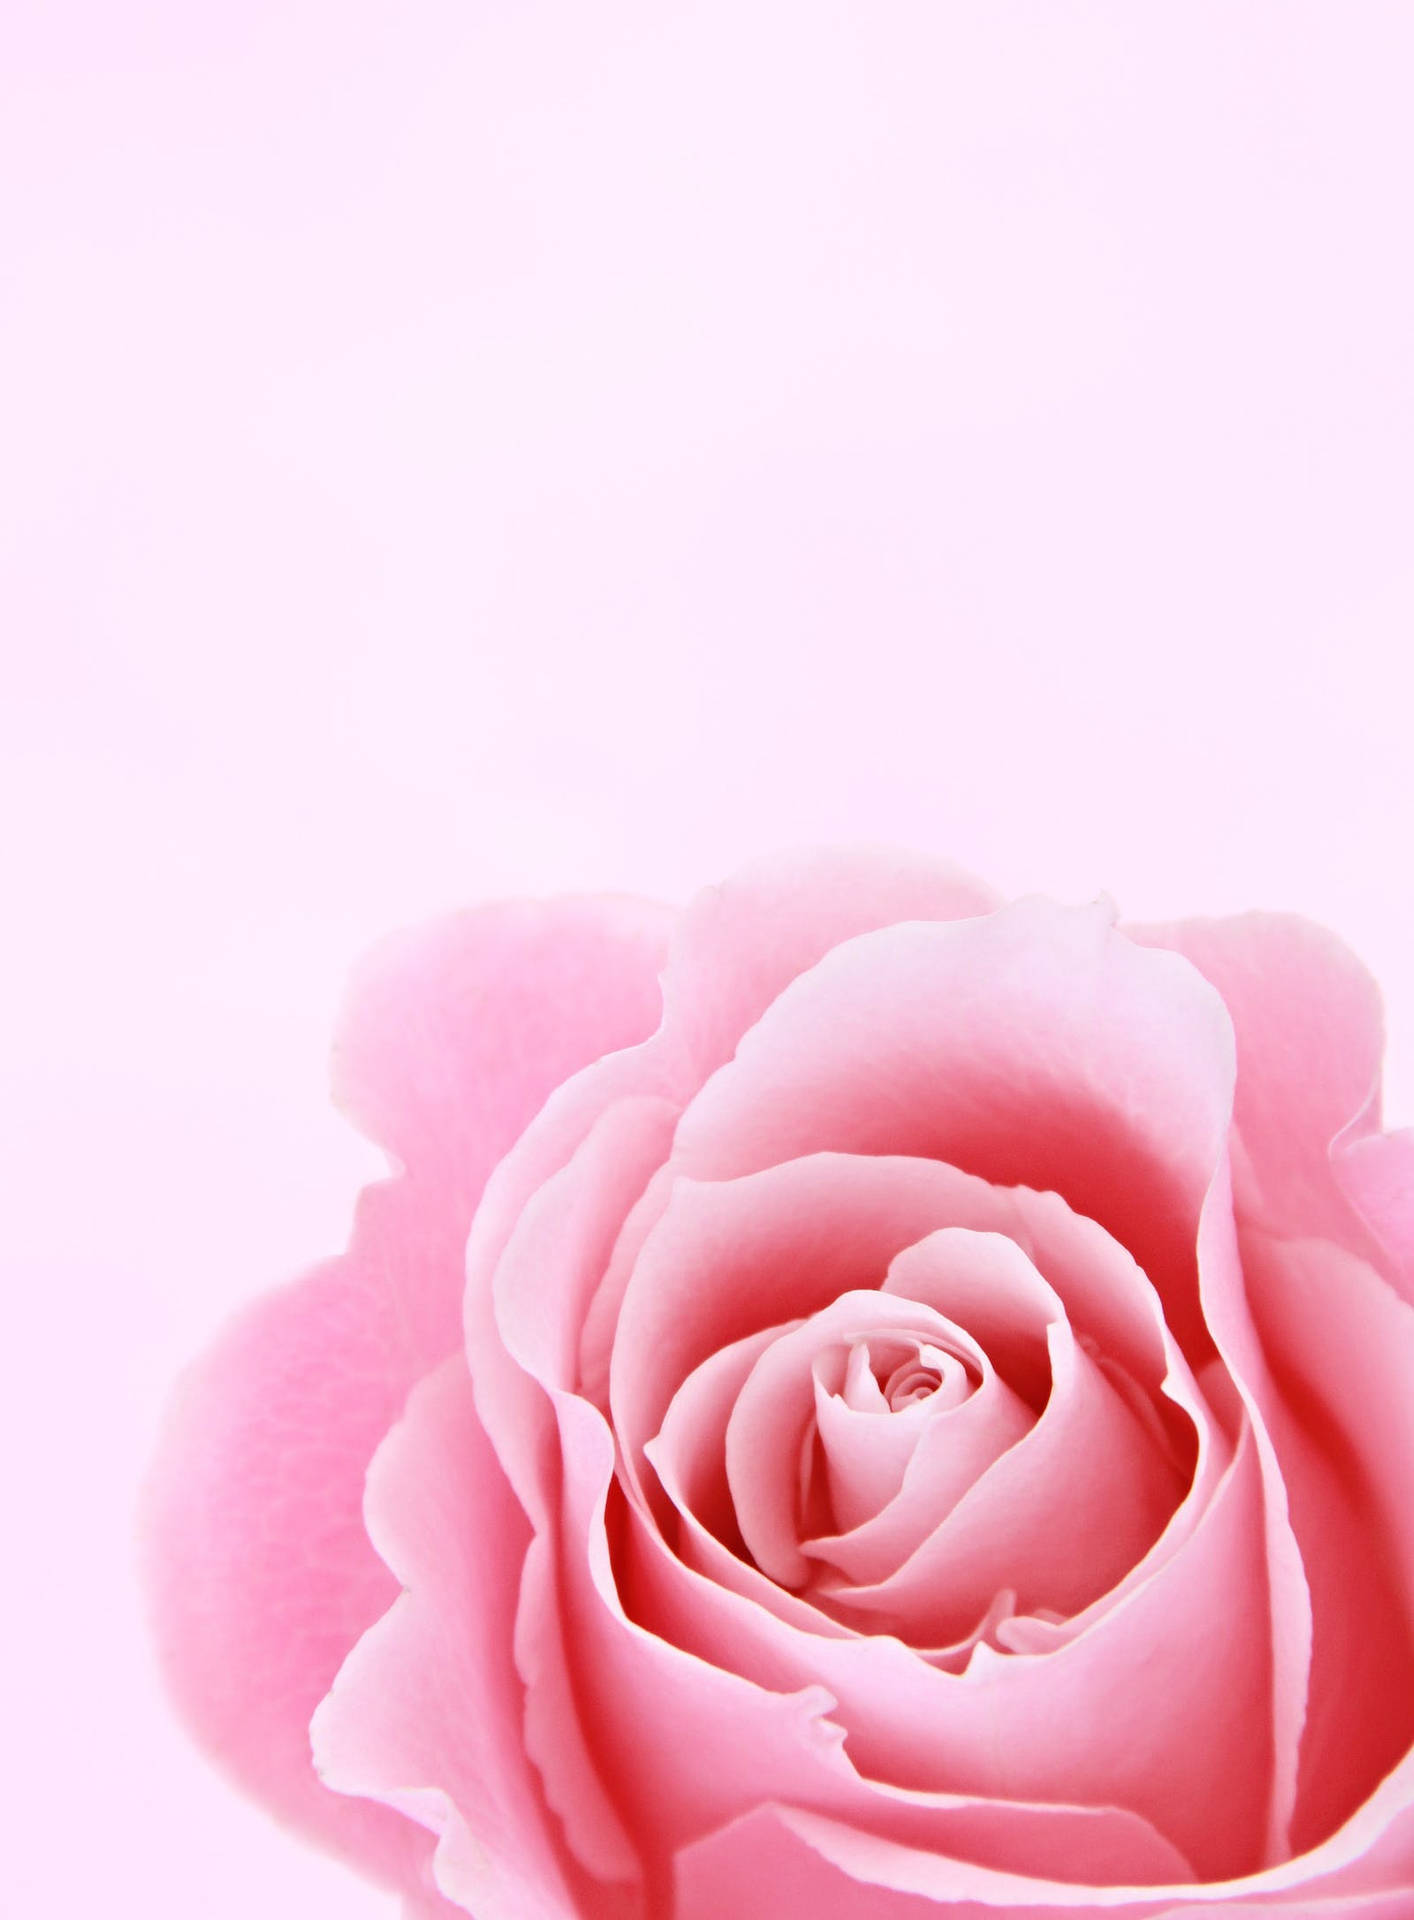 Wallpaper Red Rose Aesthetic Rose Aesthetics Art Flower Background   Download Free Image